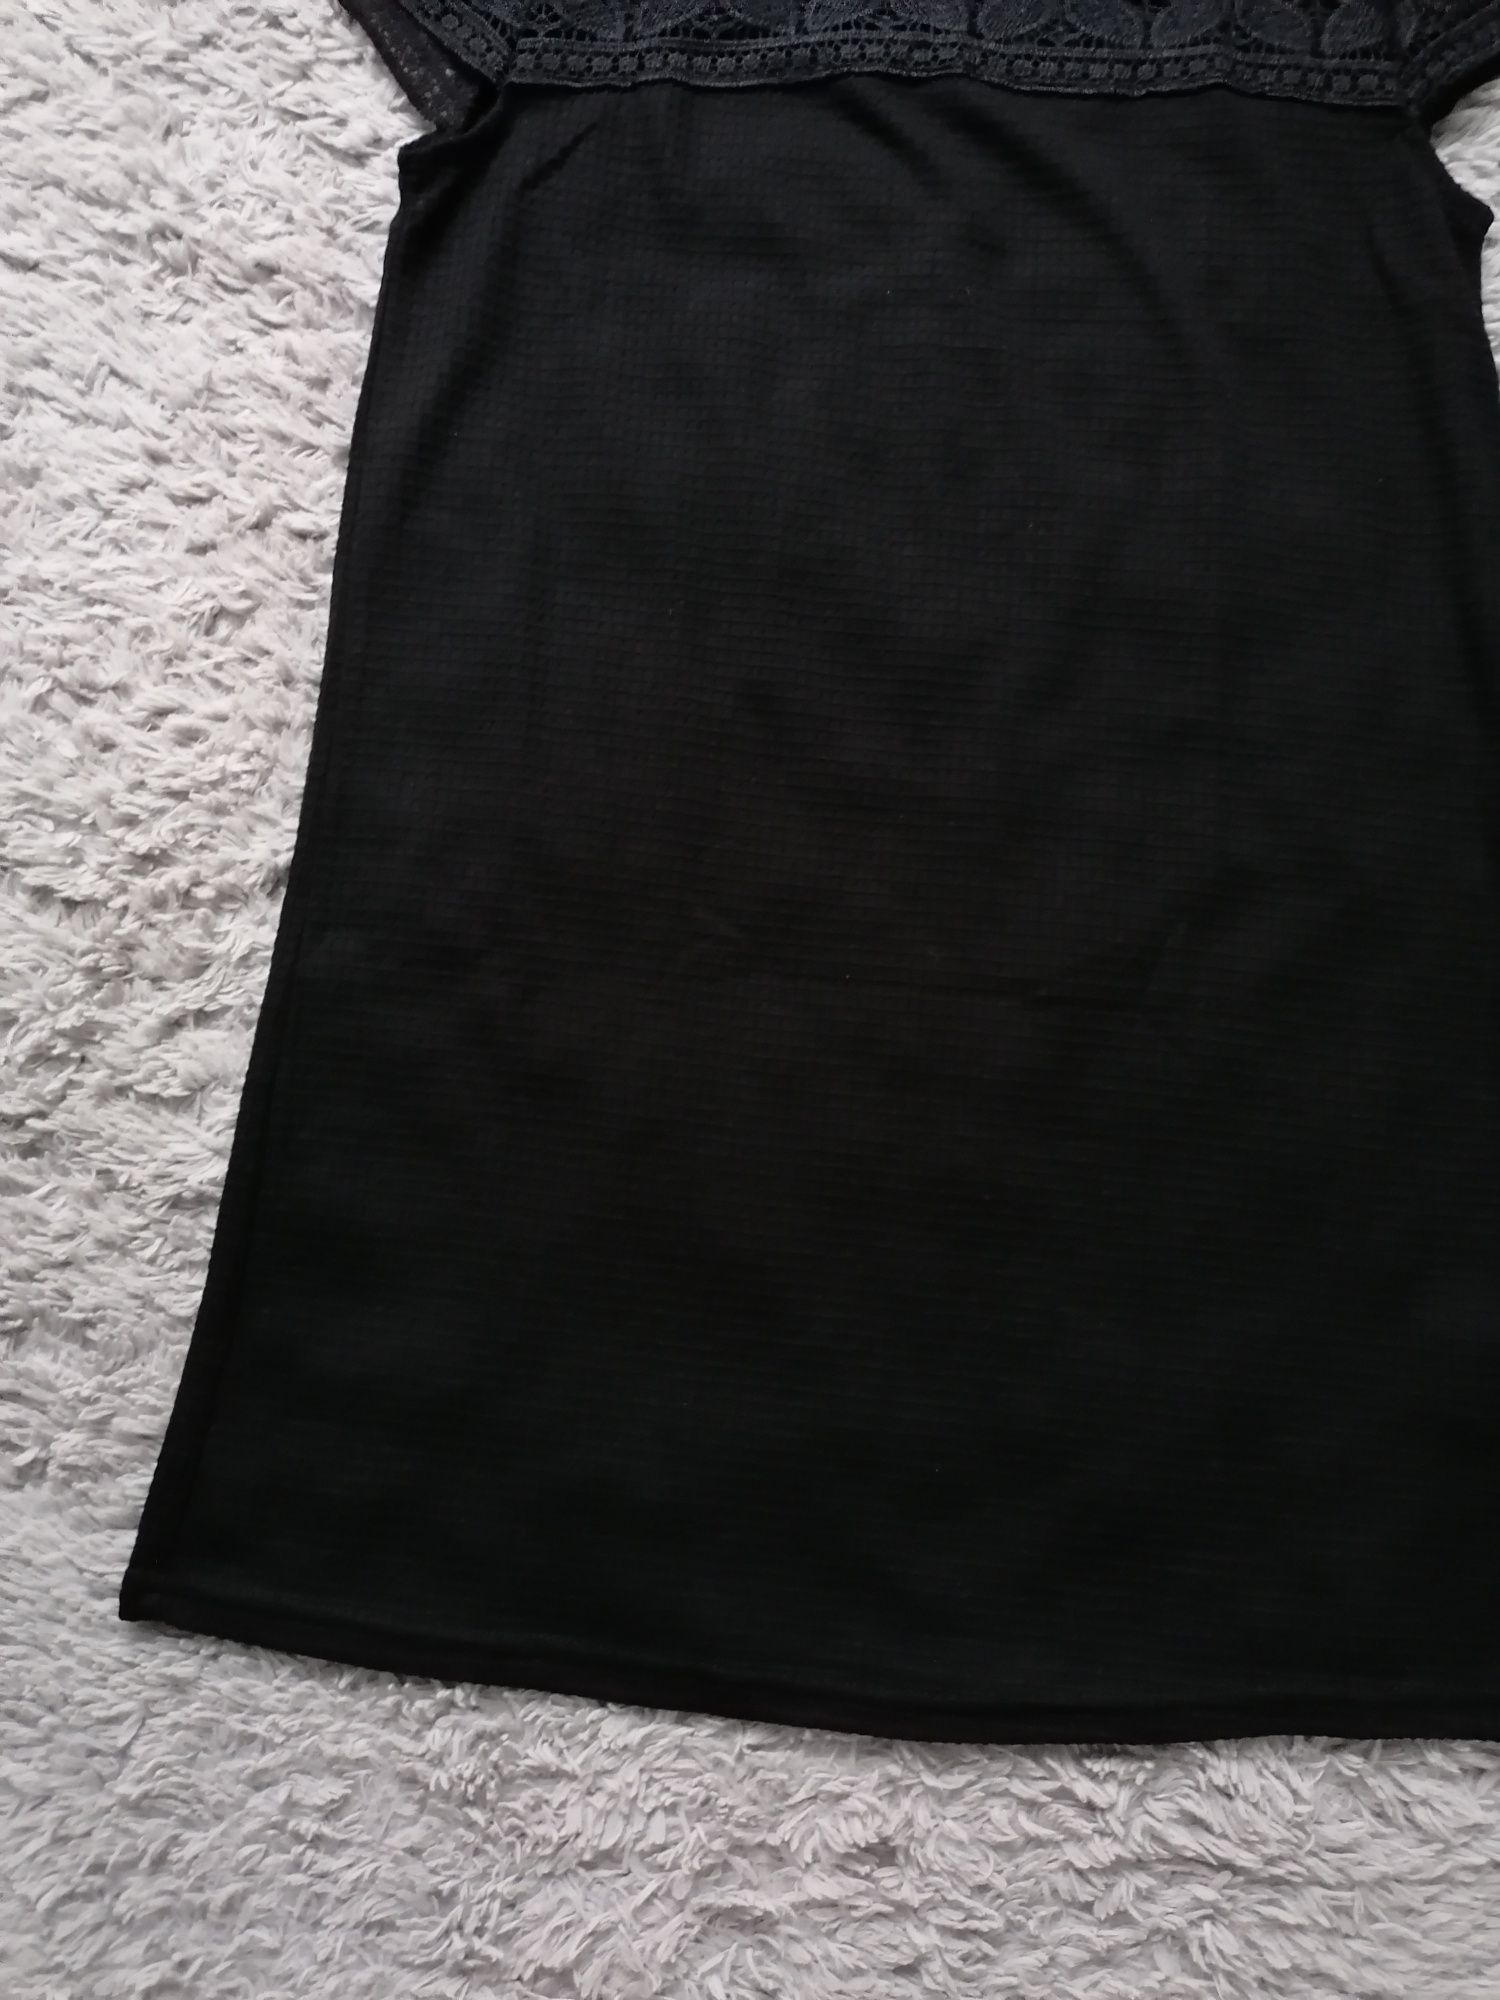 Czarna sukienka z koronką haftem 36 S